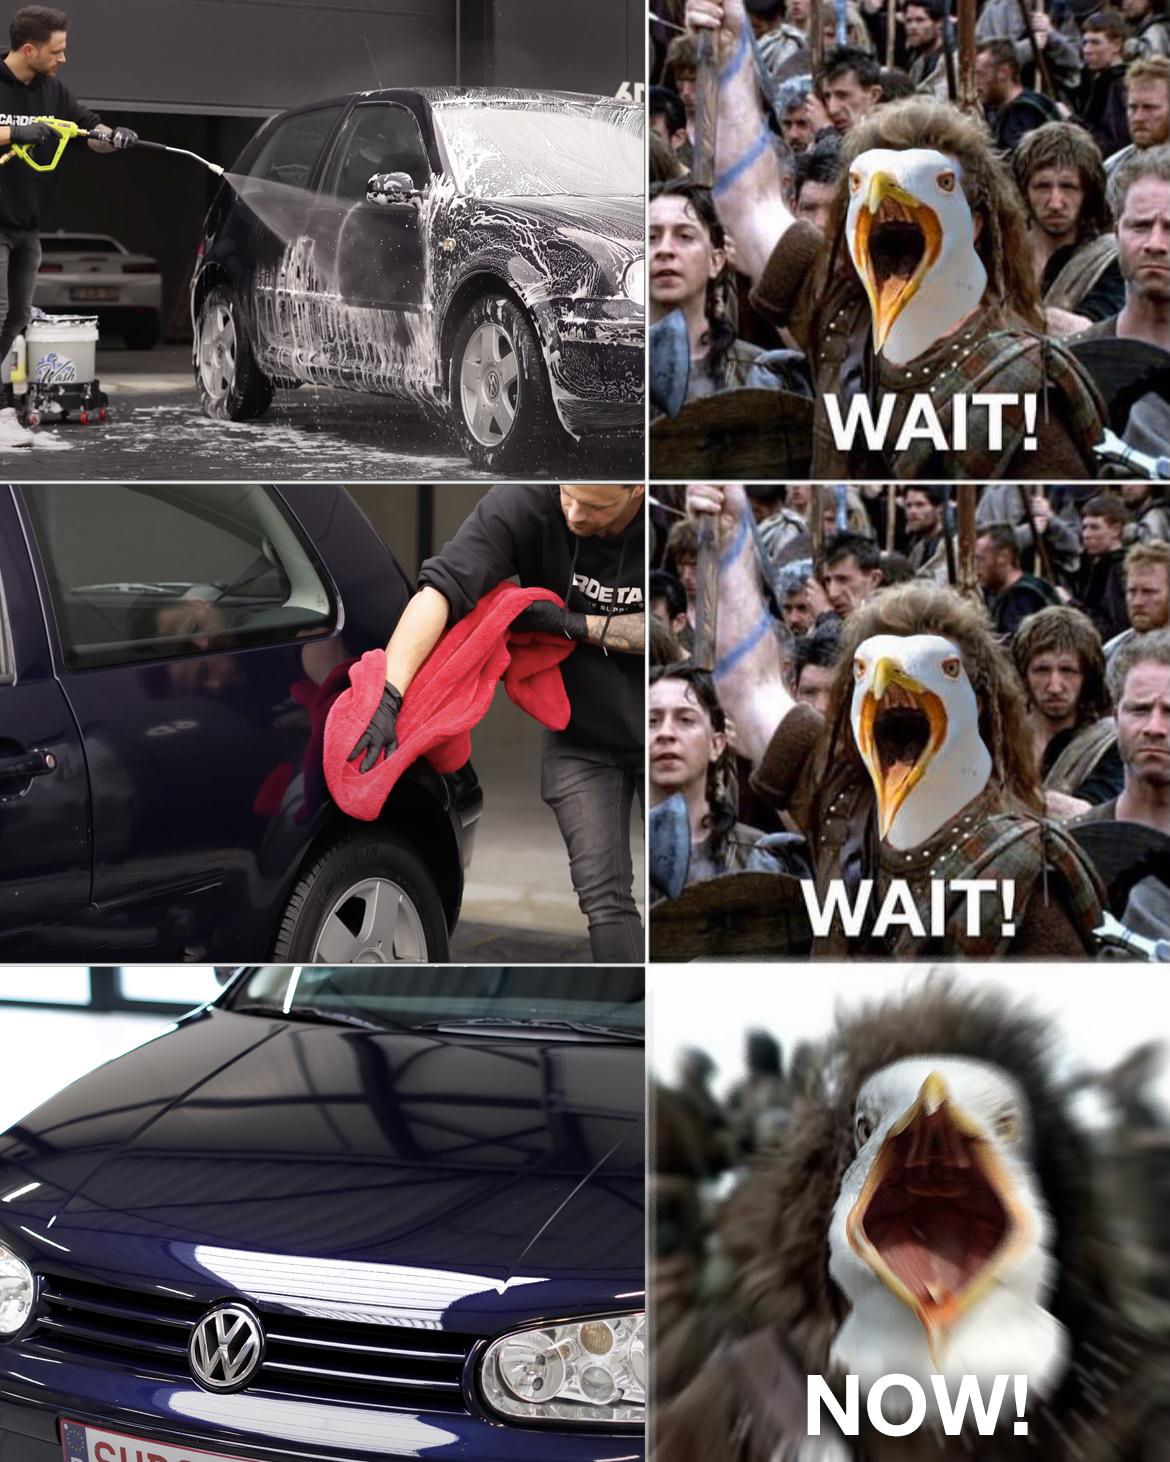 funny memes and pics - vehicle door - Foeta Wait! Wait! Now!